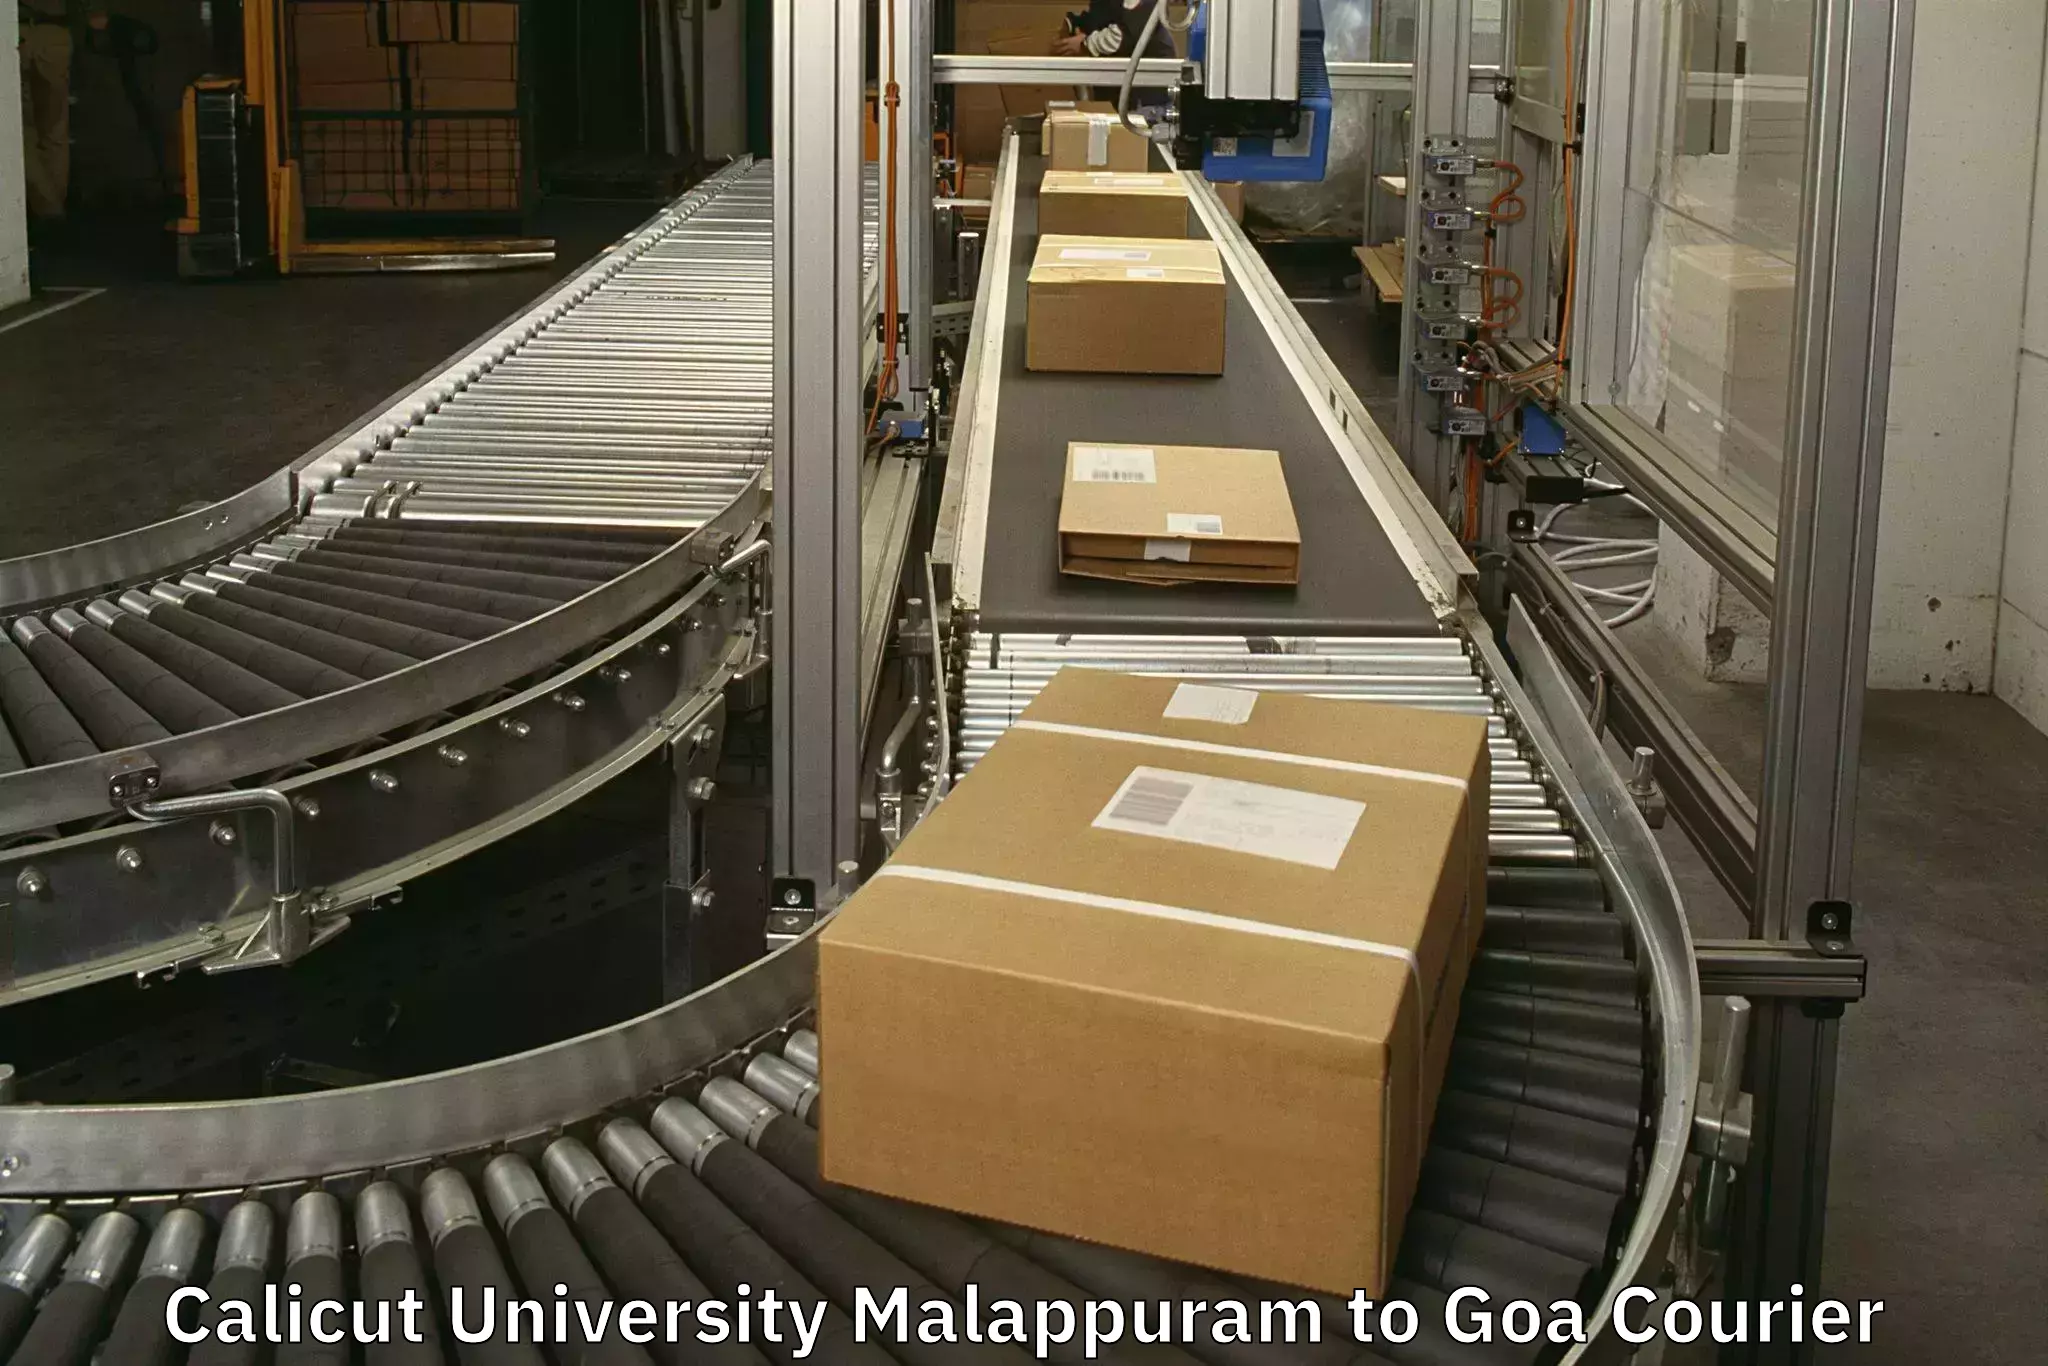 Baggage transport technology Calicut University Malappuram to Goa